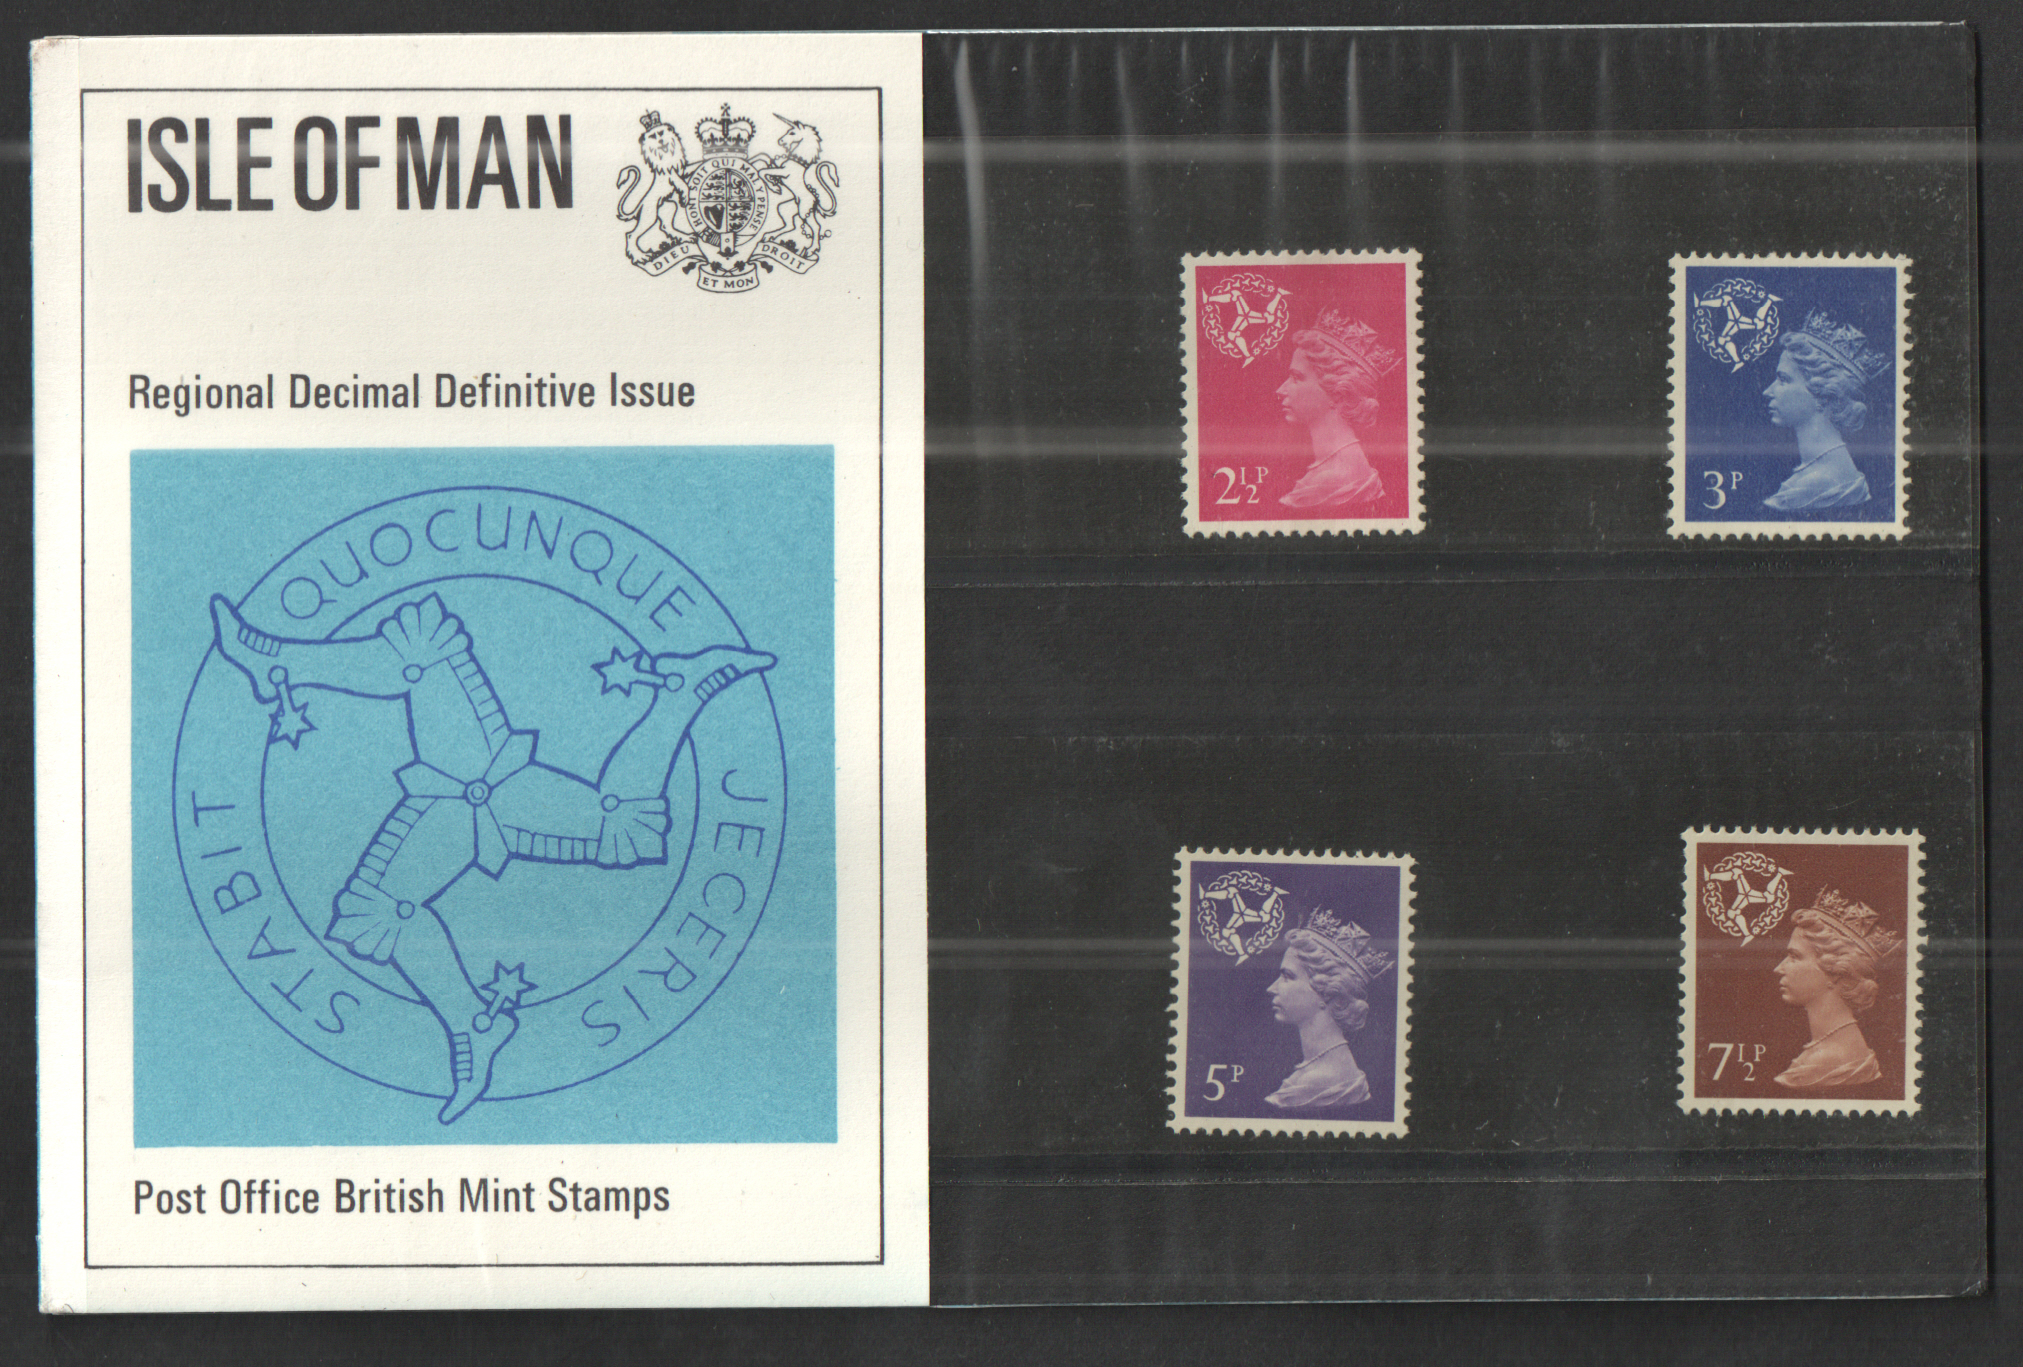 1971 Isle of Man Definitive Royal Mail Presentation Pack 30